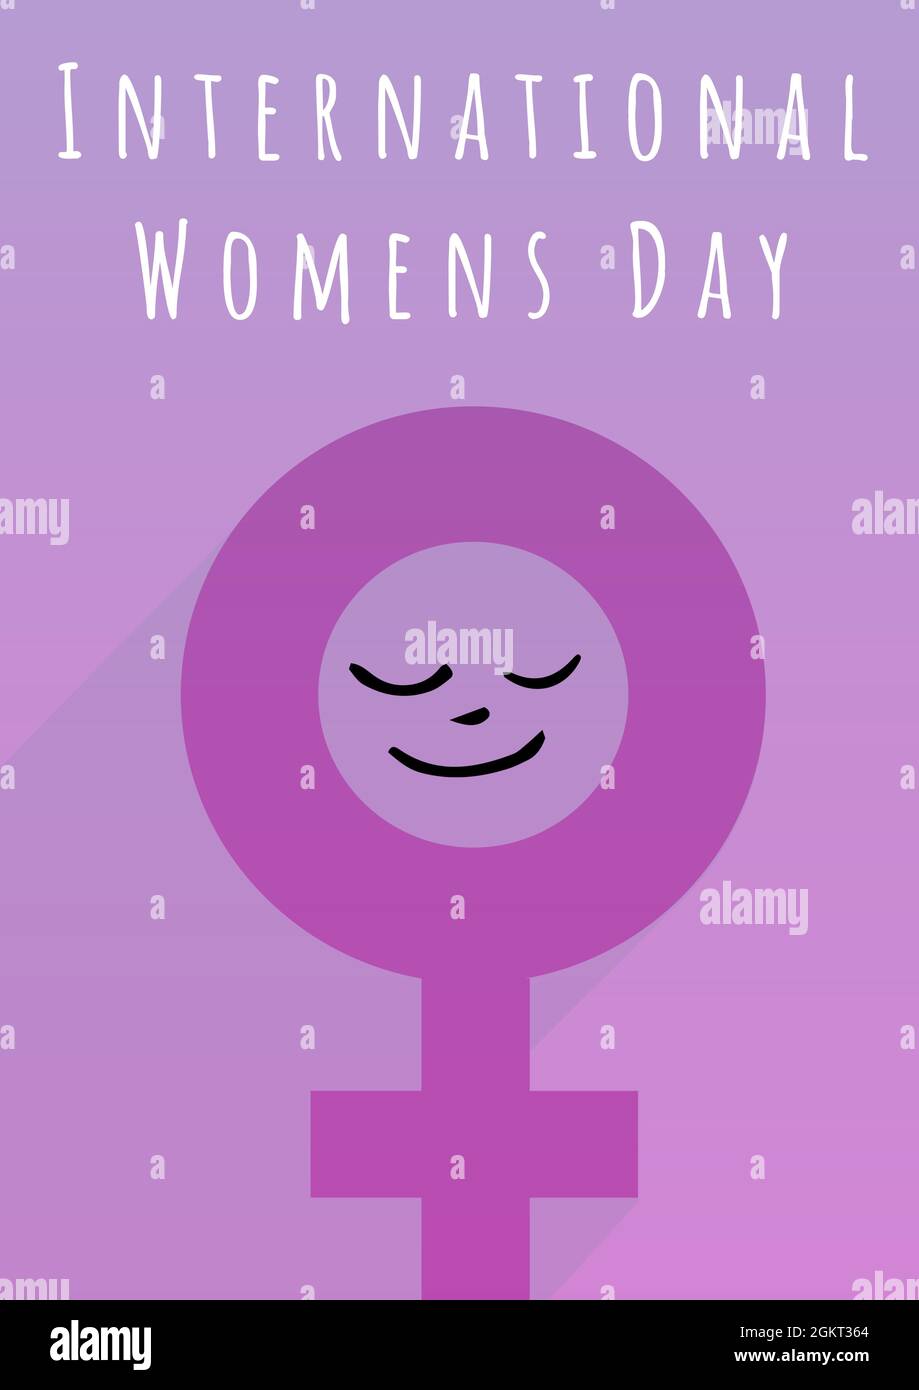 International women's day text over female gender symbol against purple background Stock Photo